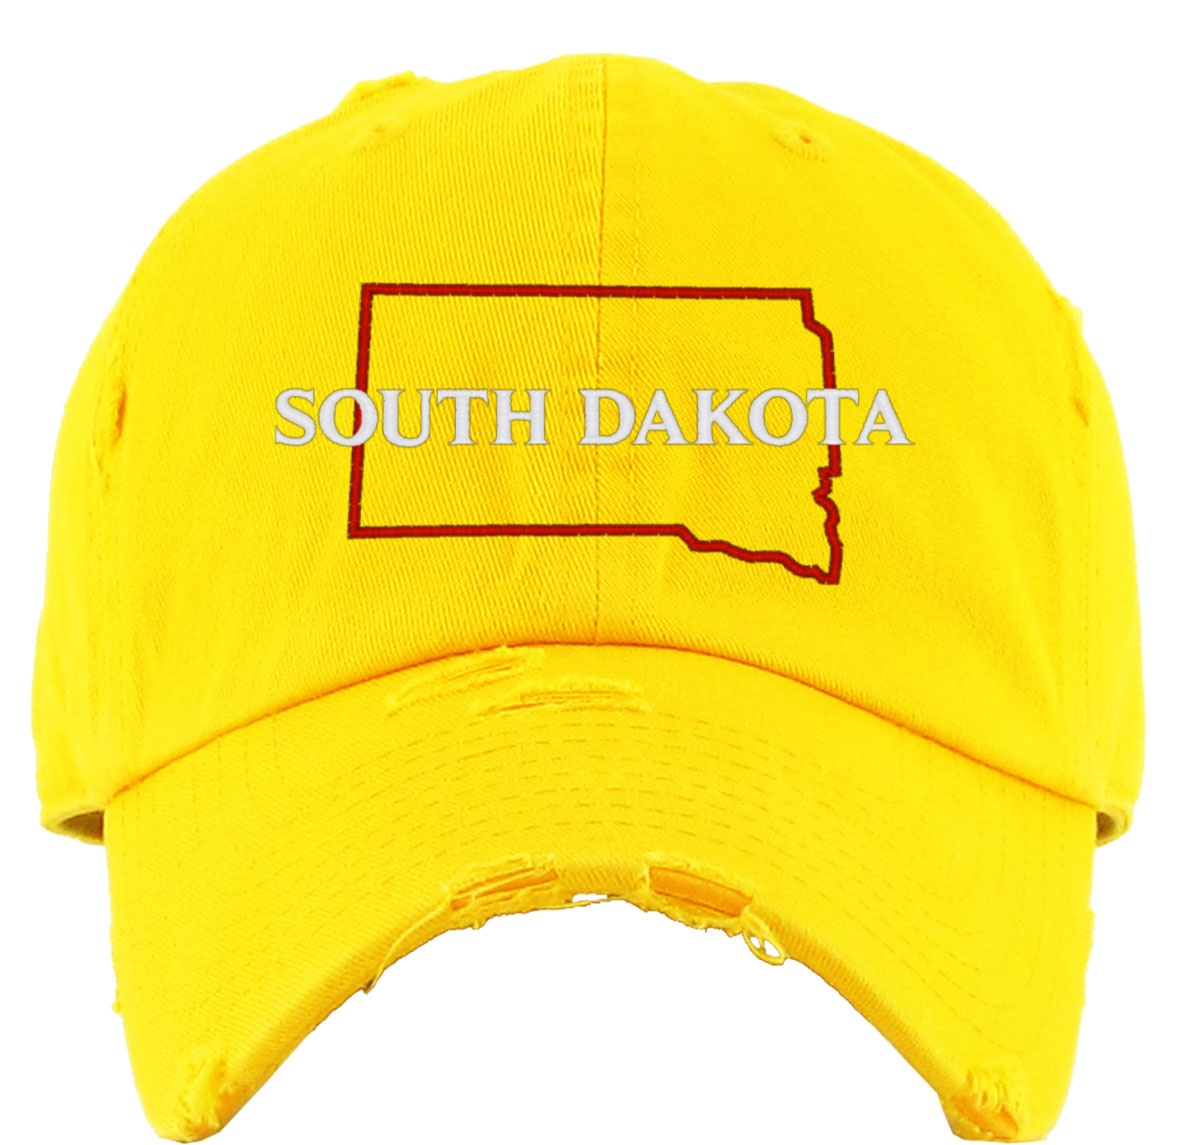 South Dakota Vintage Baseball Cap